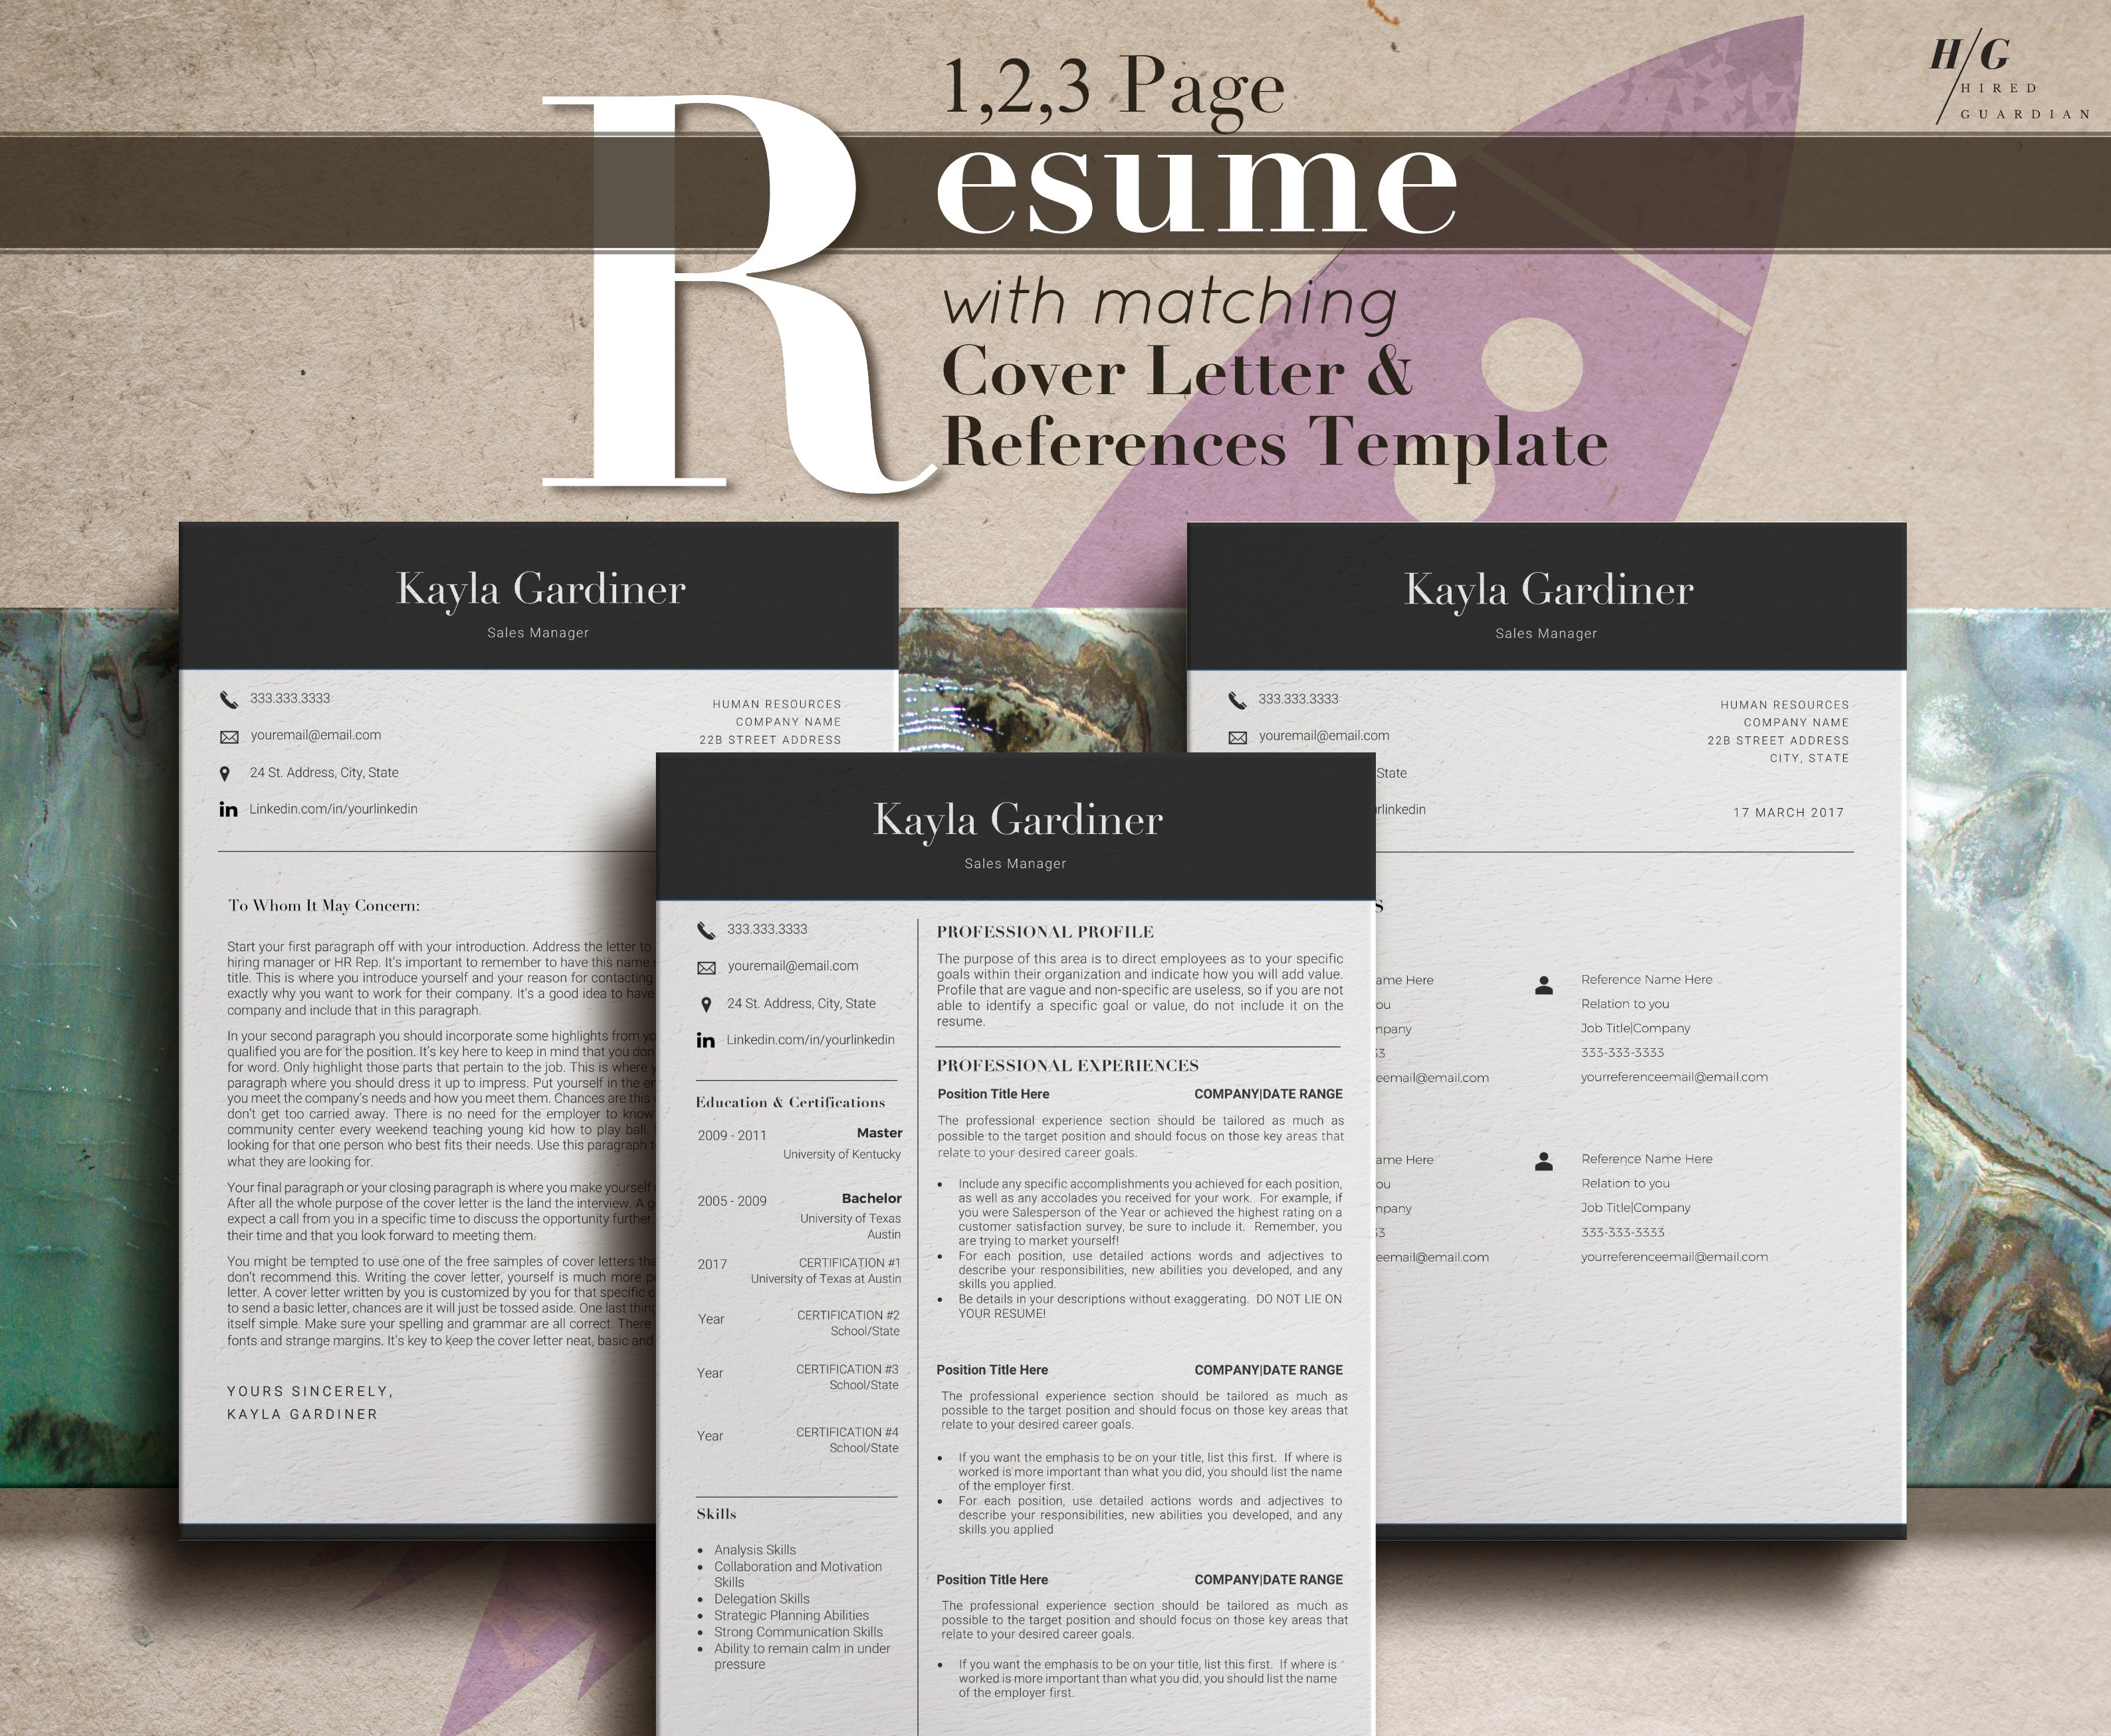 3 3 page resume template lebenslauf vorlage resume template with cover letter resume copy copy copy copy copy 2 574